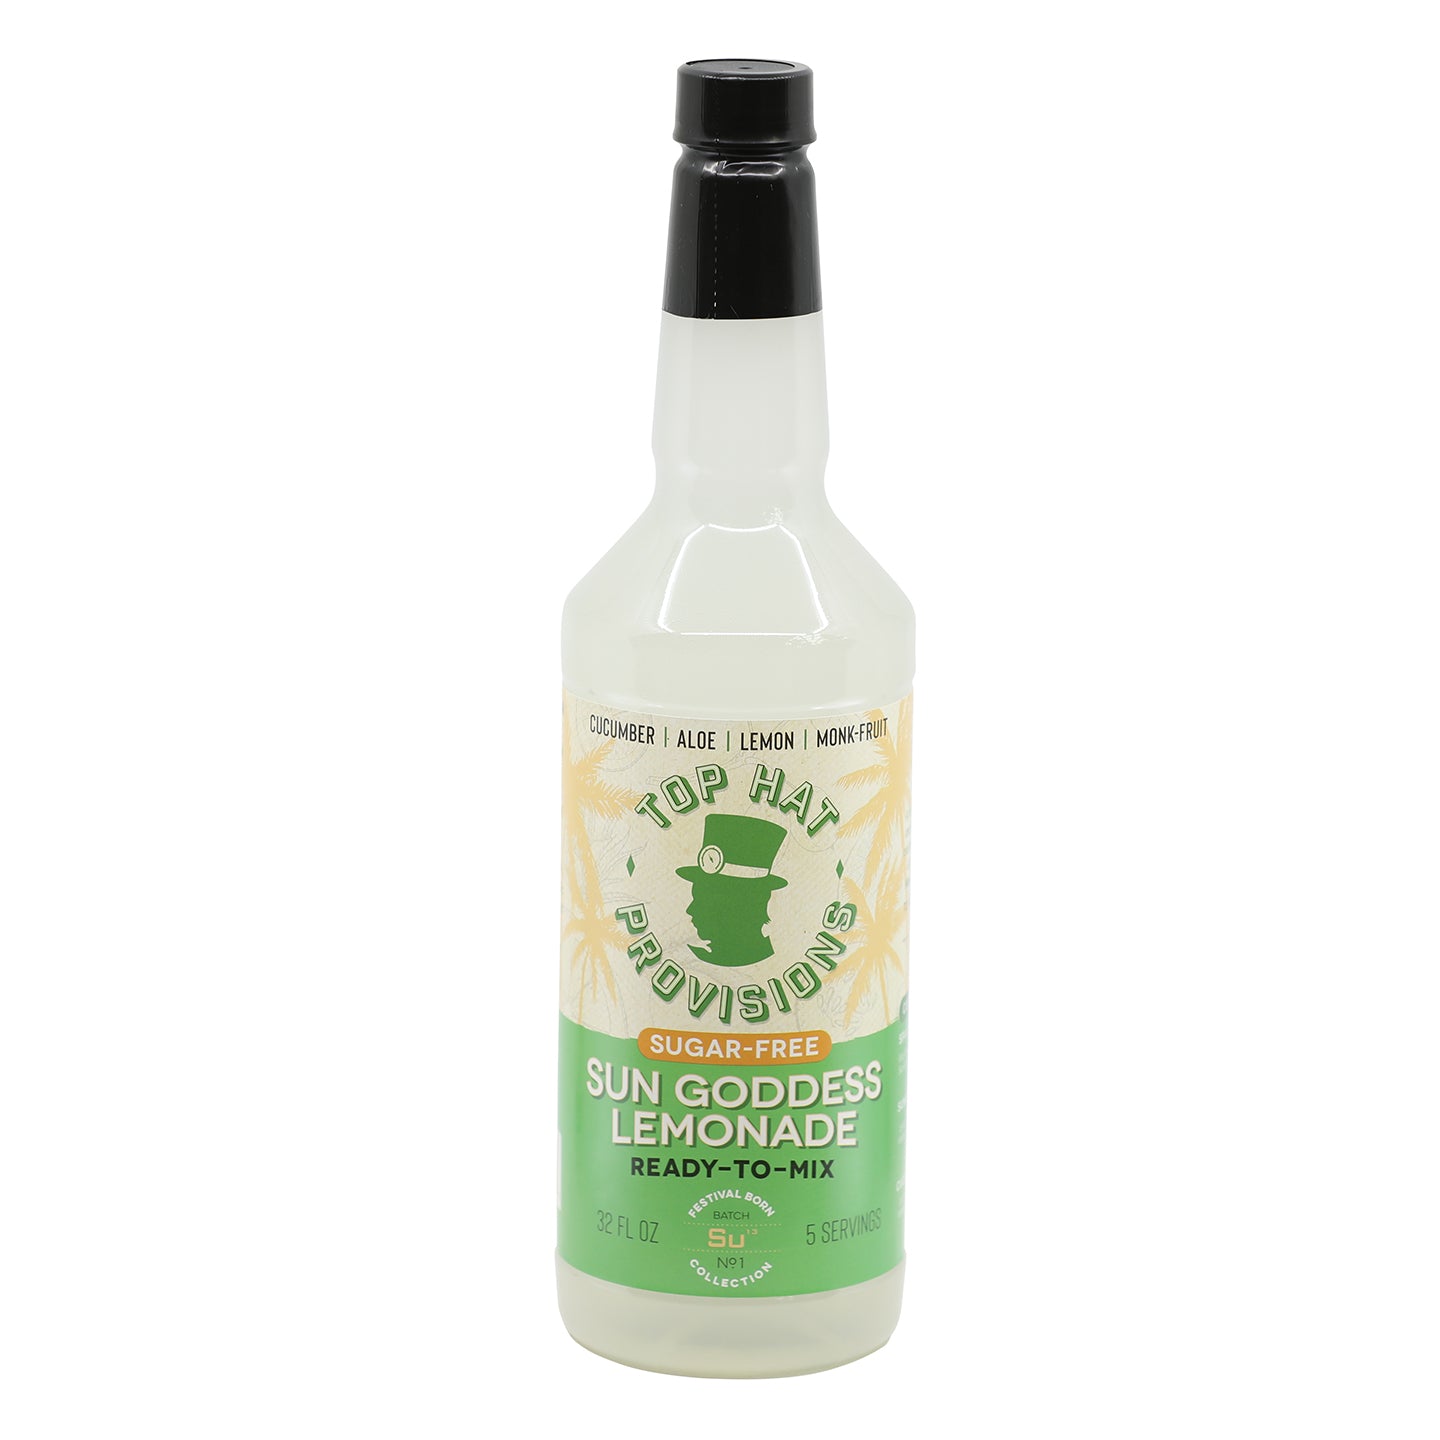 Top Hat Keto Sugar Free Cucumber Lemonade - 12 pack of 32oz bottles (Naturally sweetened with keto friendly / carb free / zero sugar Monk Fruit)